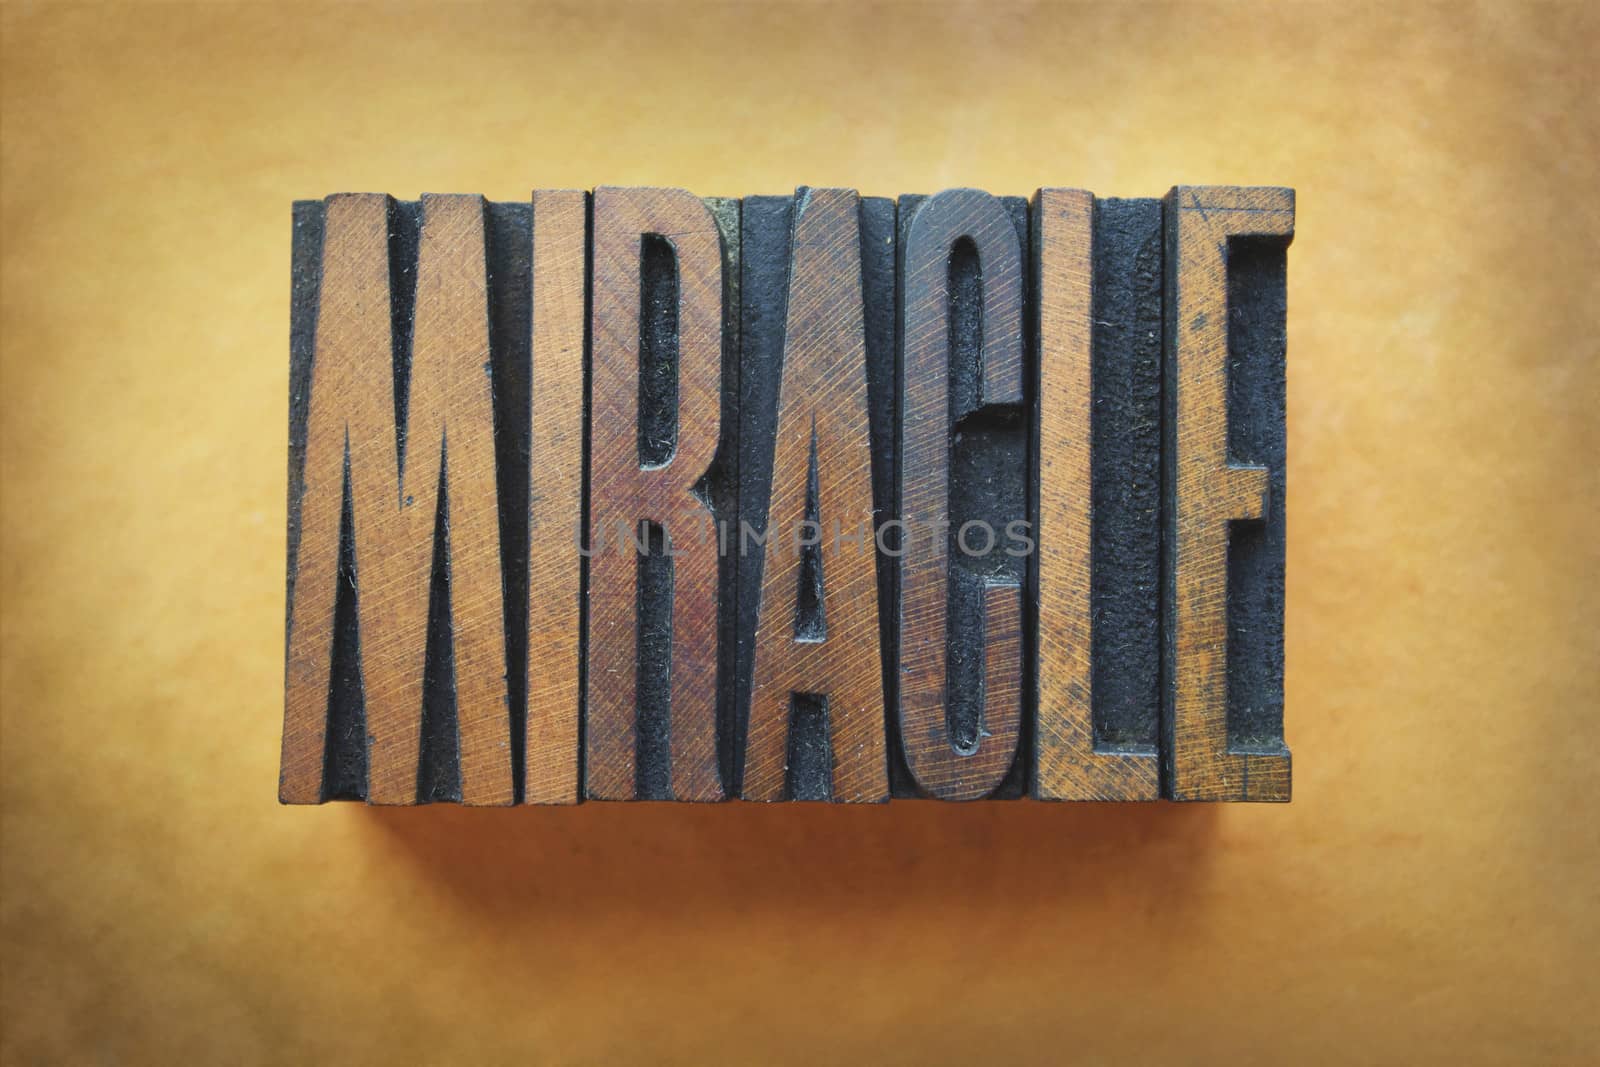 The word MIRACLE written in vintage letterpress type.